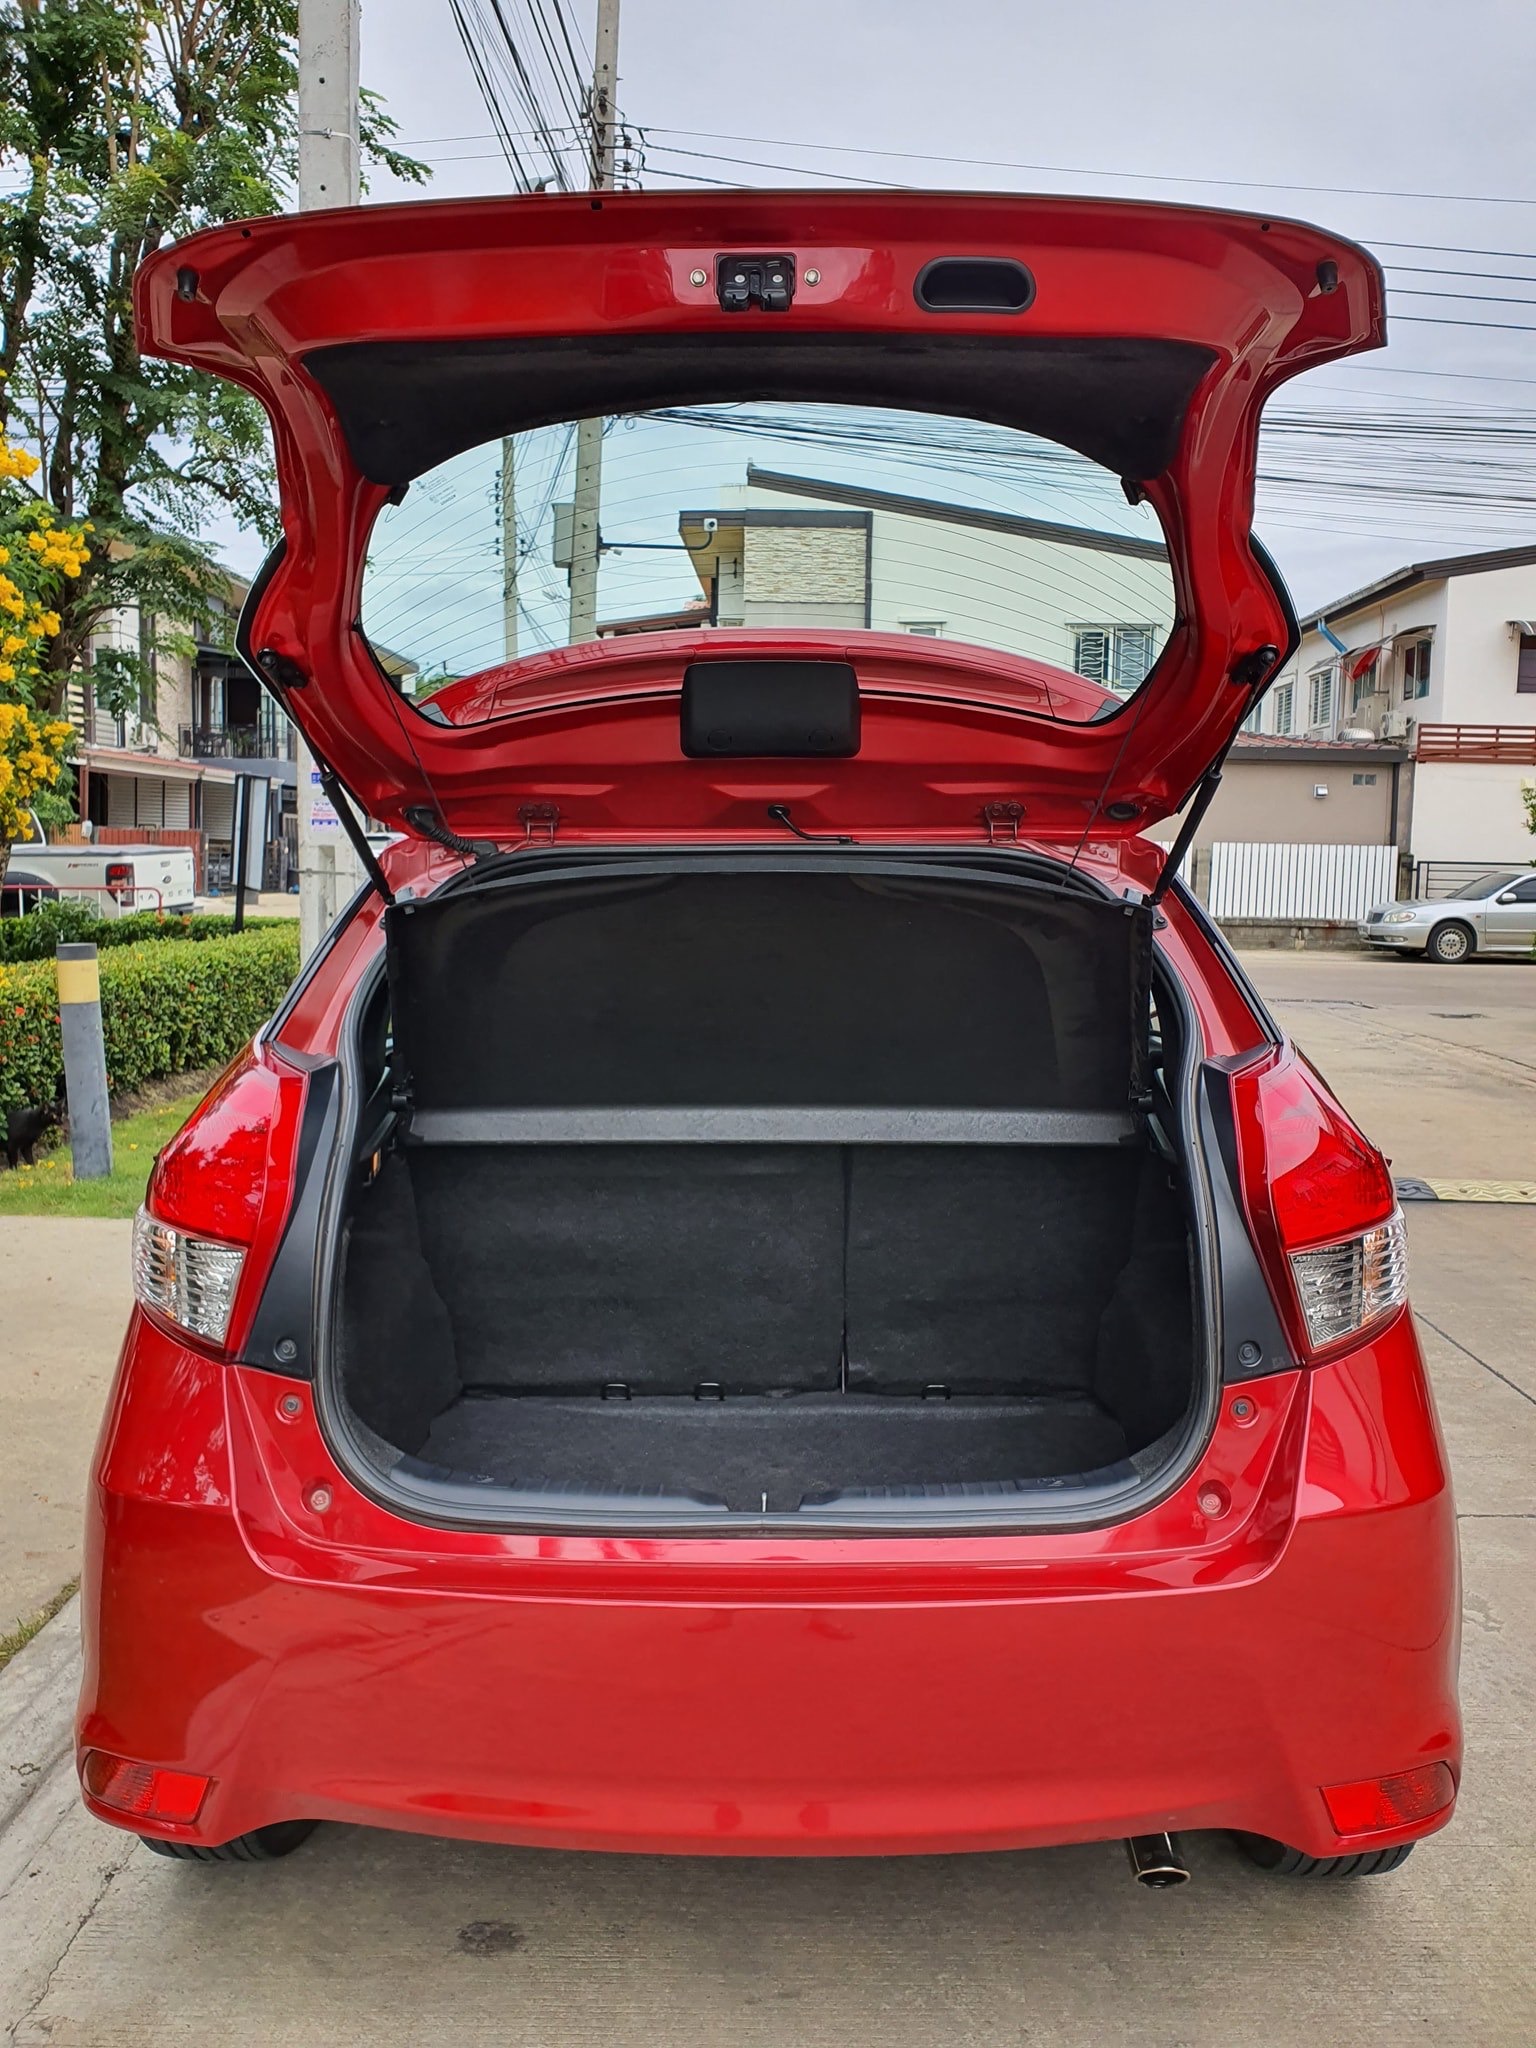 Toyota Yaris ปี 2014 สีแดง